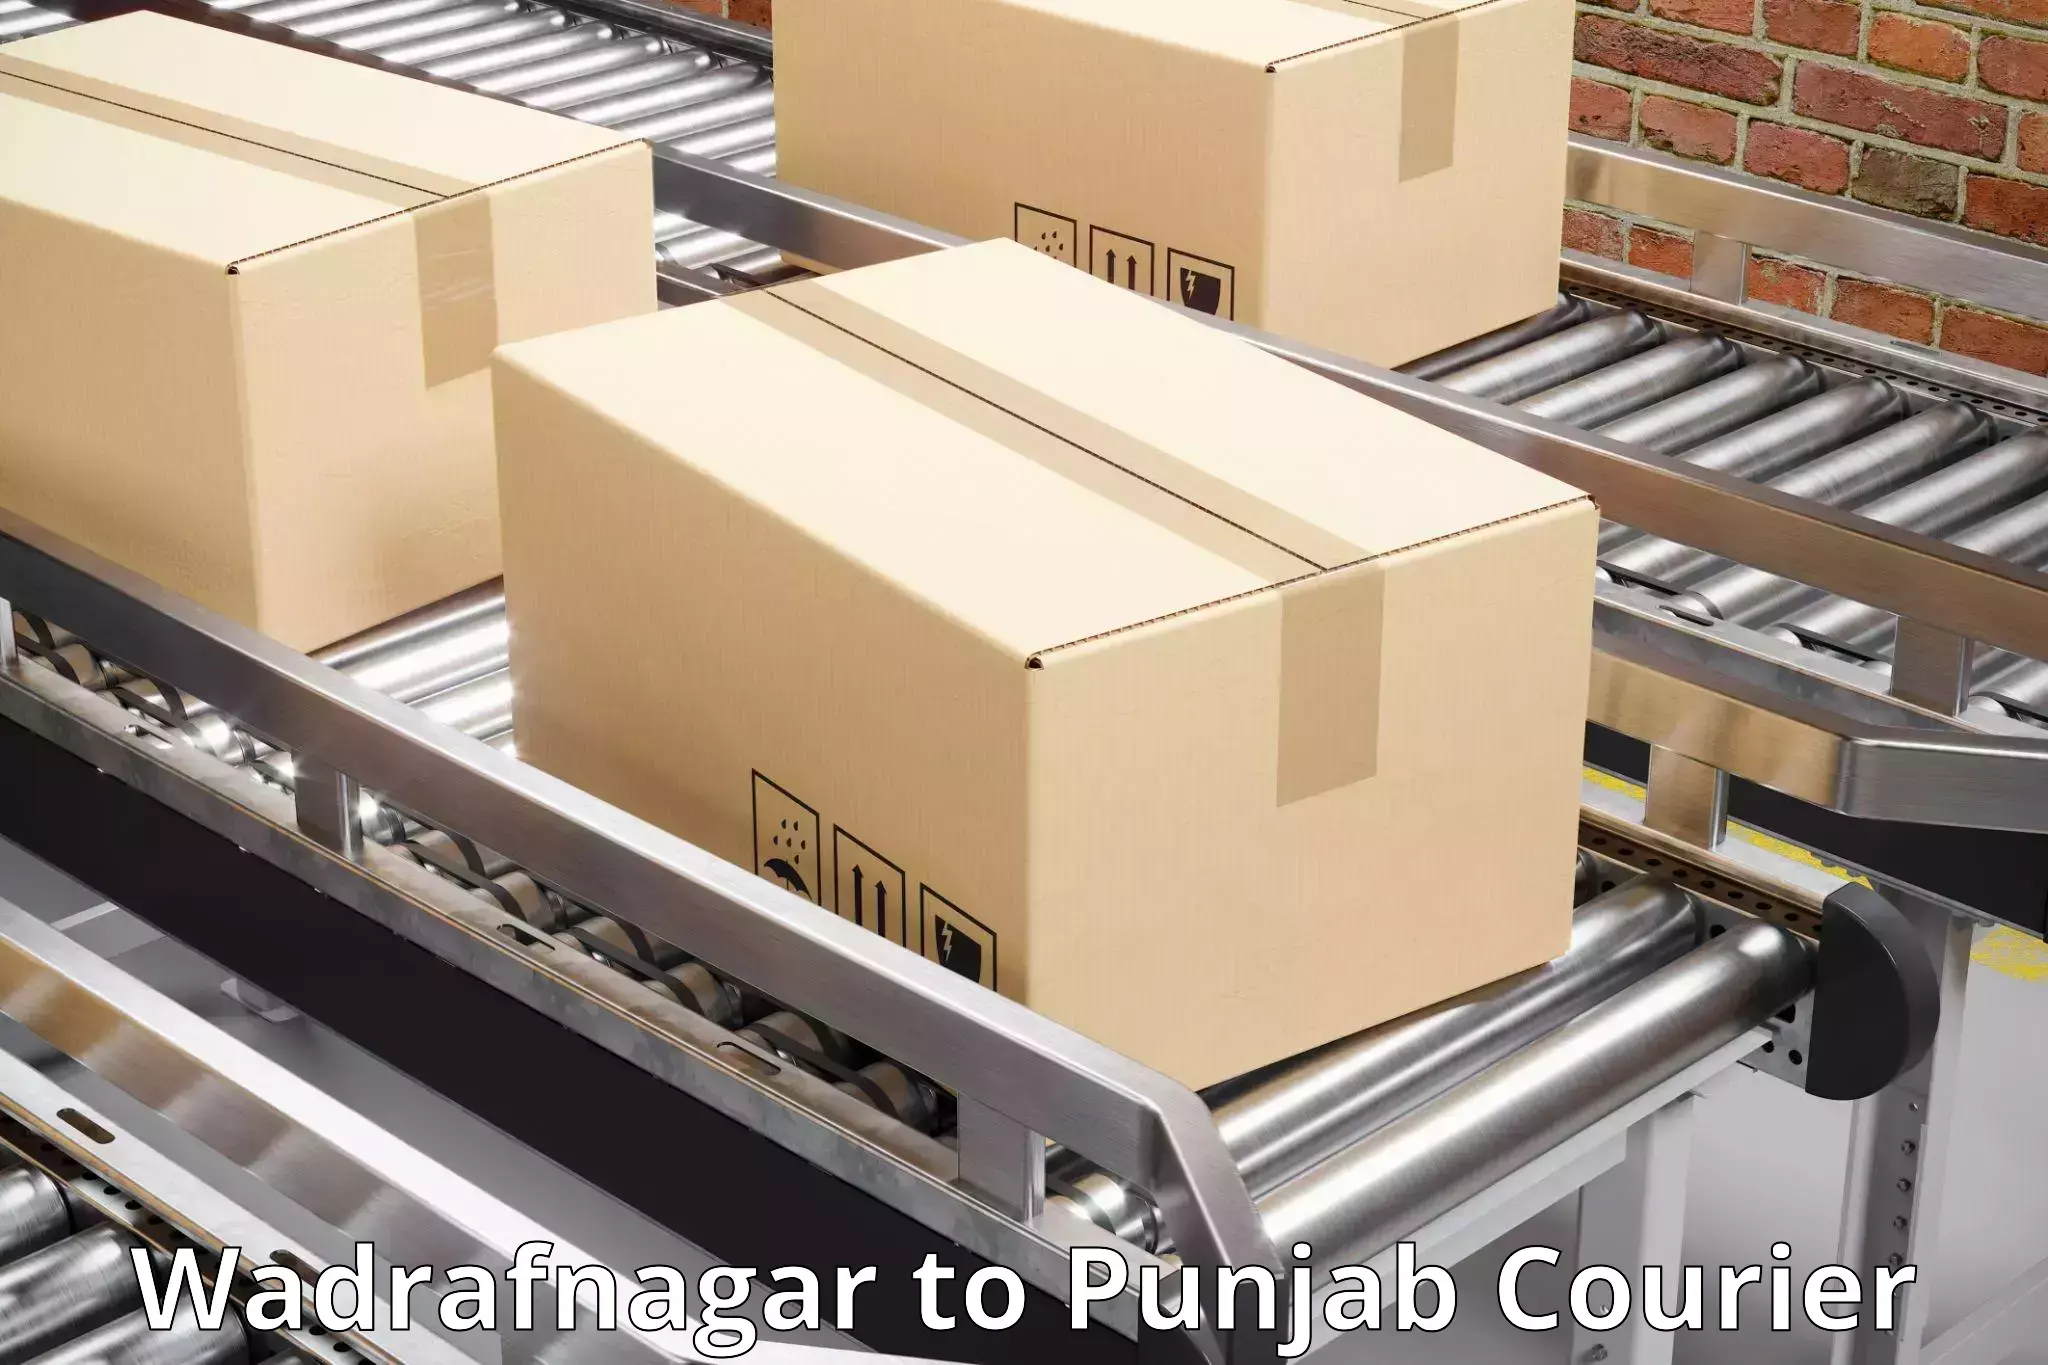 Nationwide shipping coverage Wadrafnagar to Kotkapura